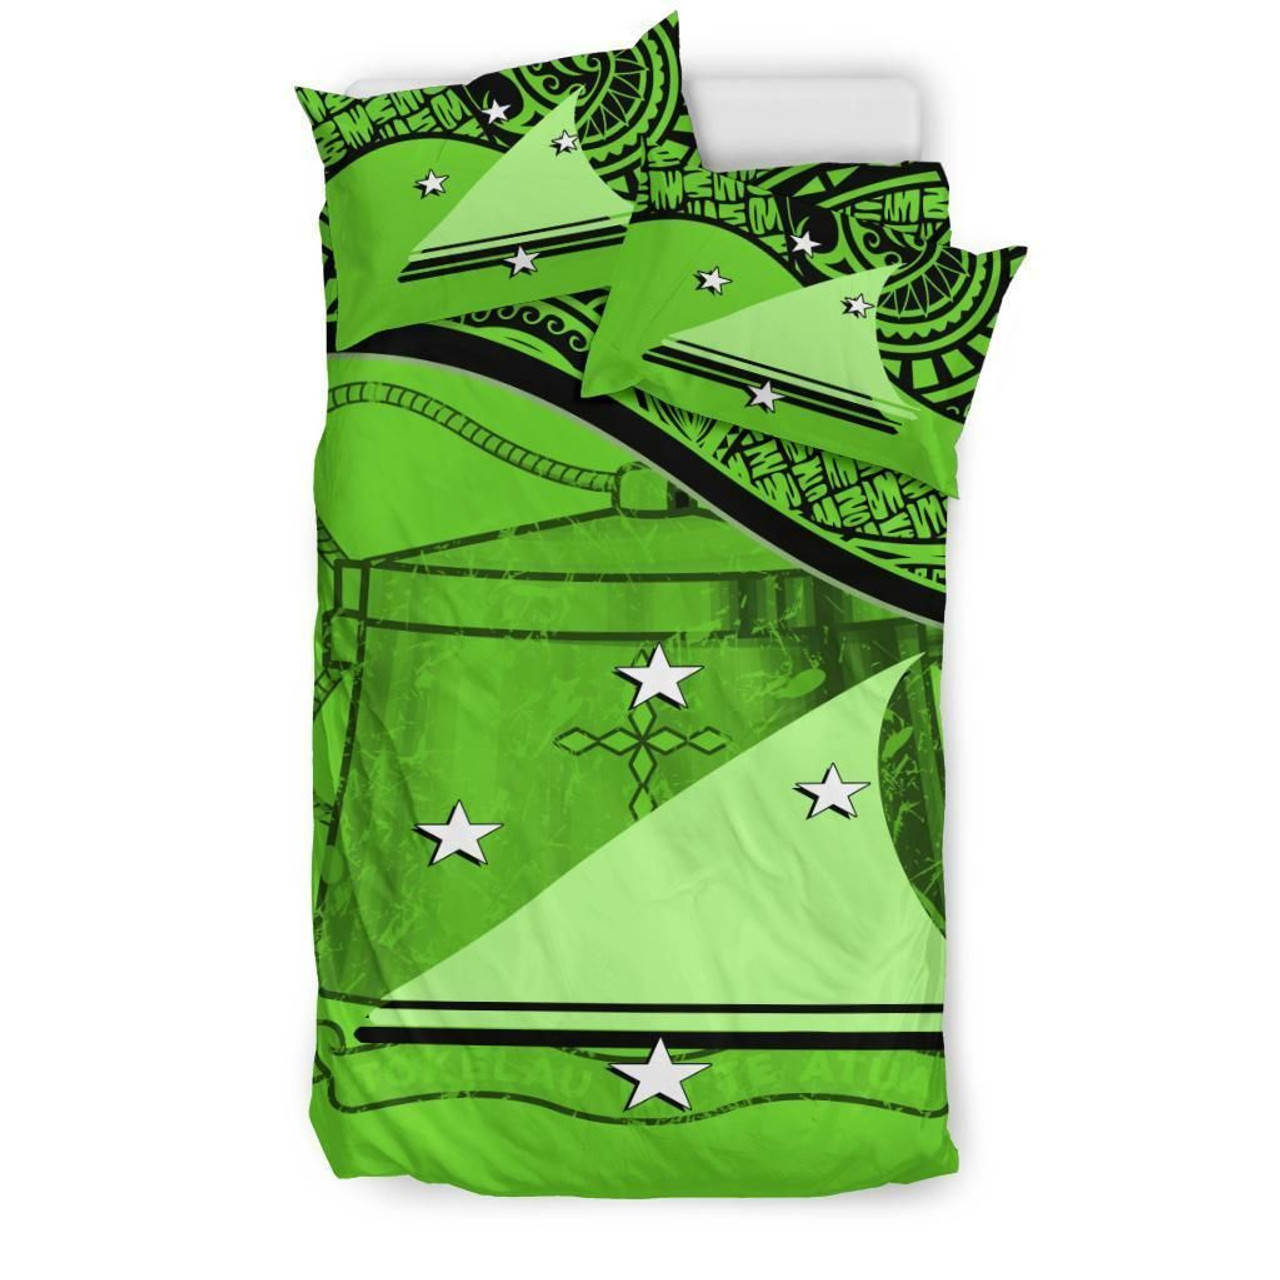 Tokelau Duvet Cover Set - Tokelau Coat Of Arms Green 3